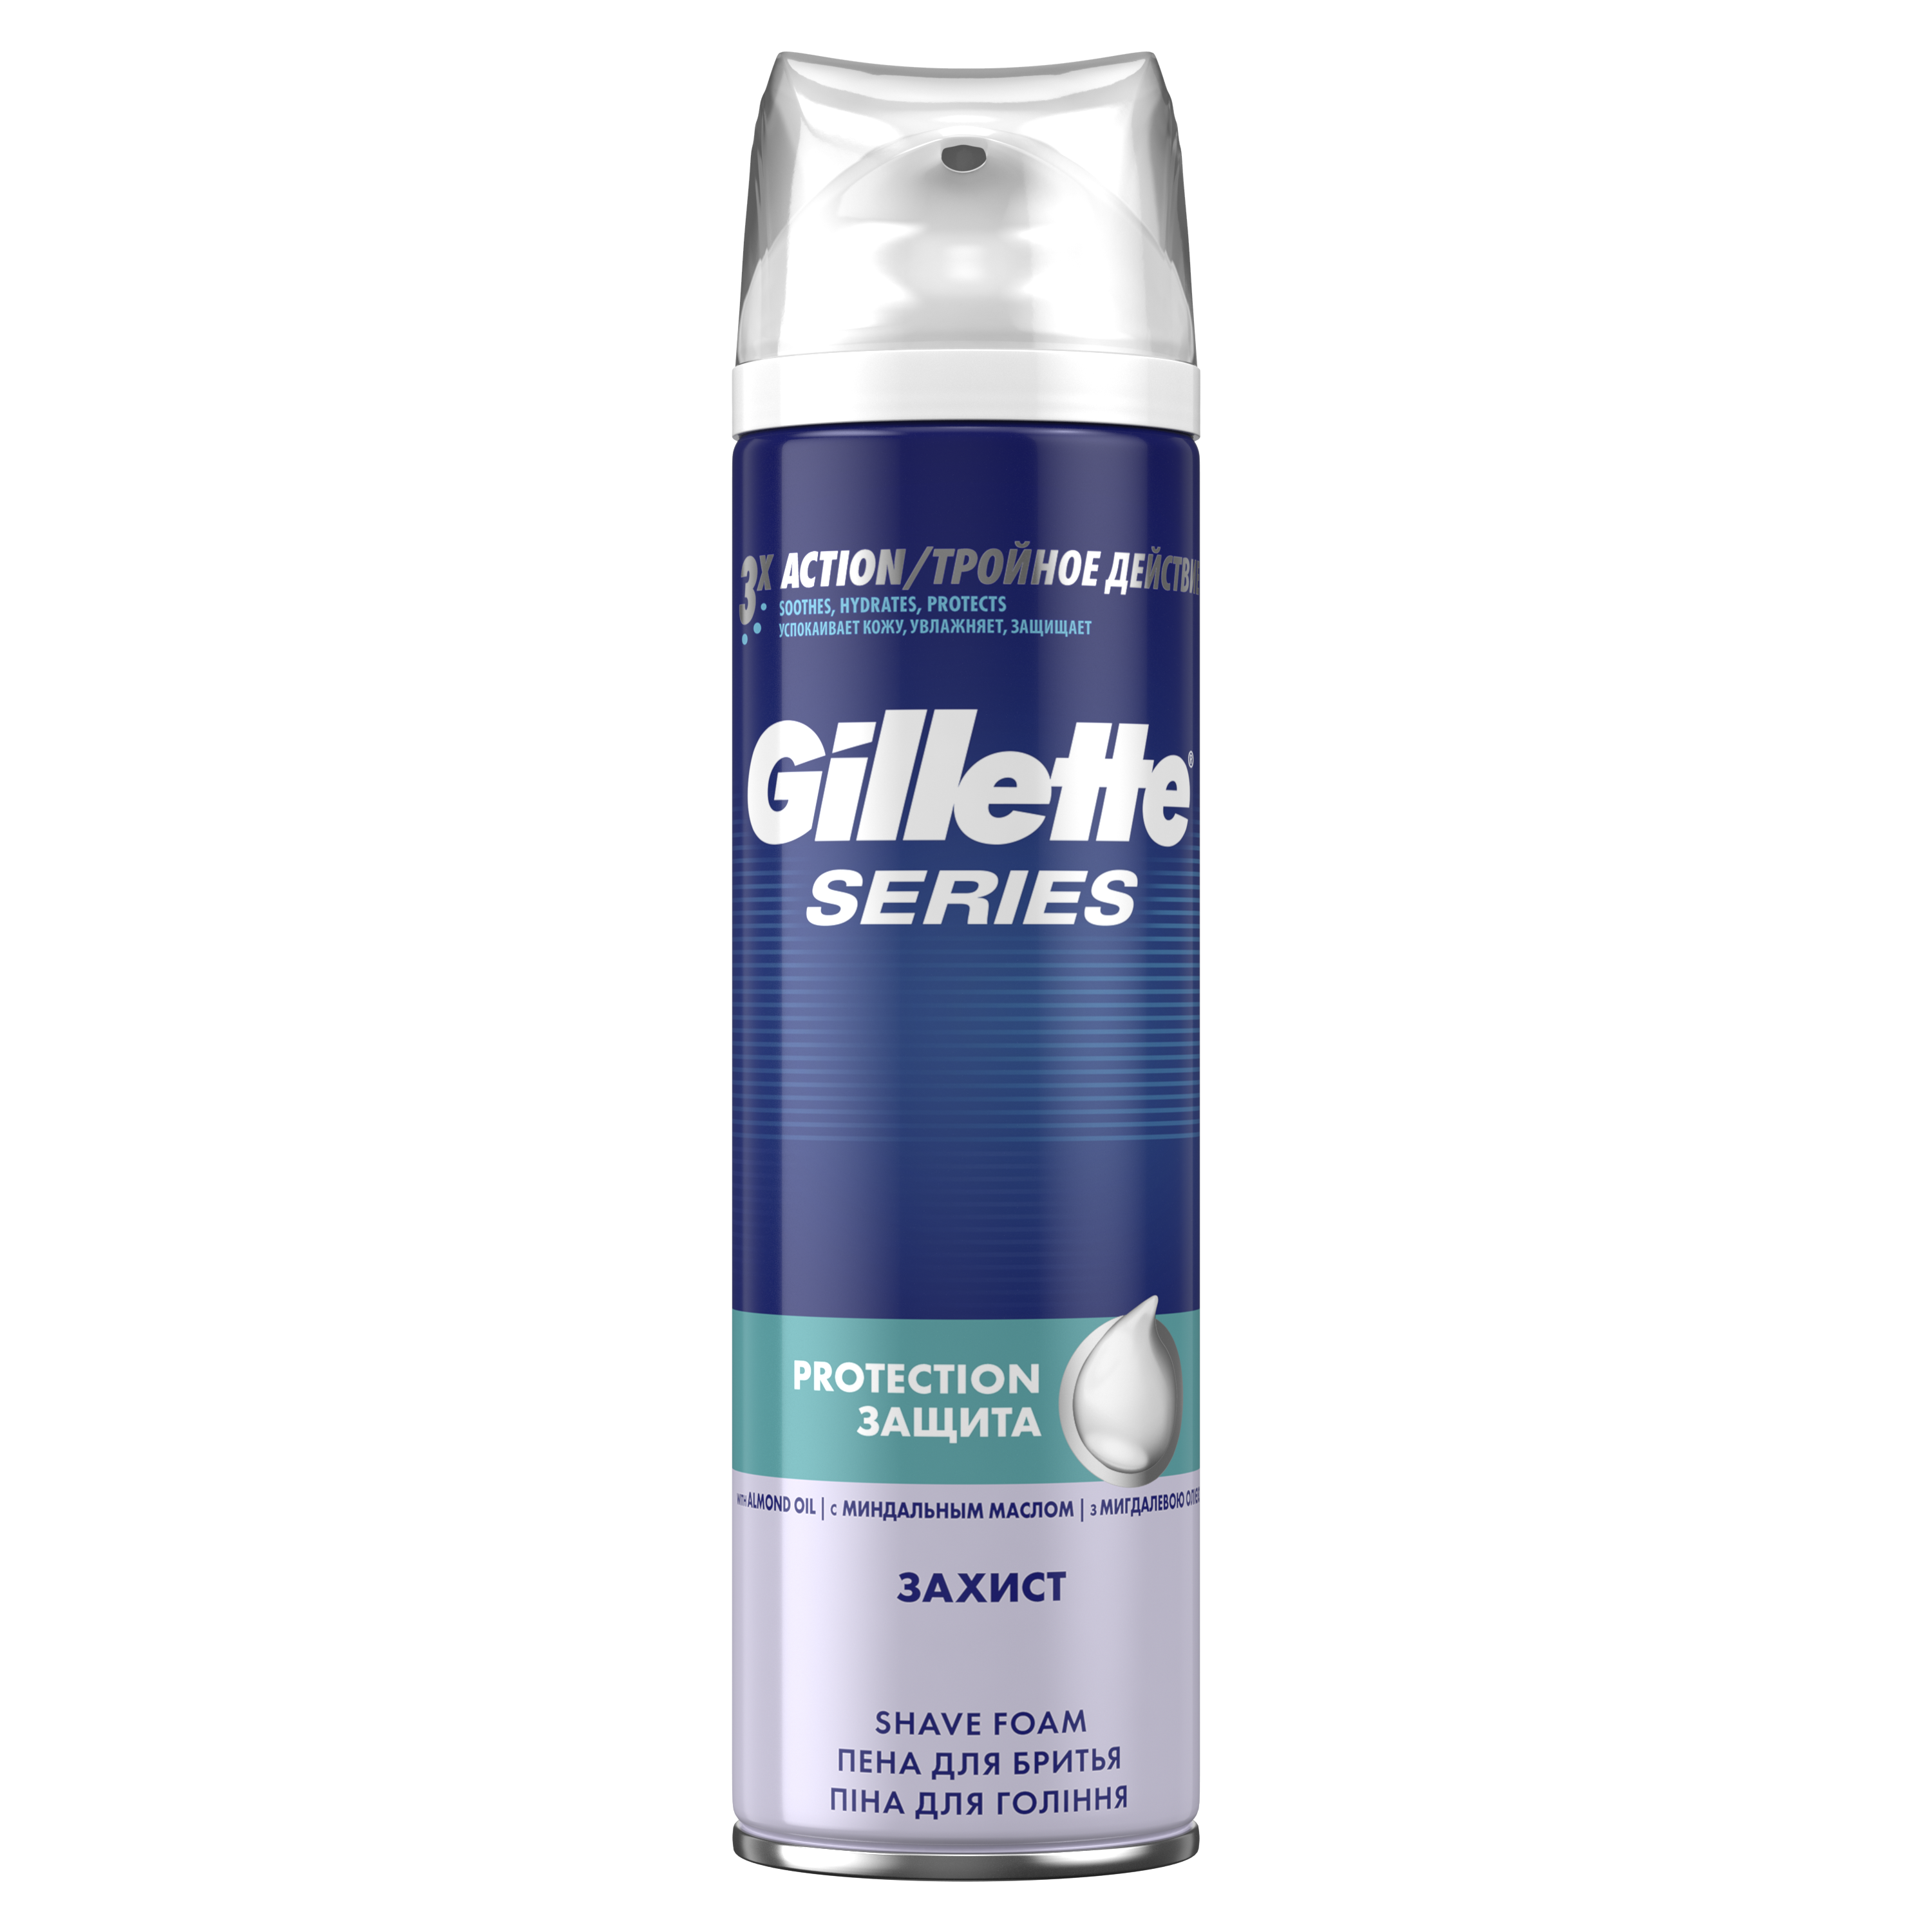 Пена для бритья Gillette Series Protection, 250 мл - фото 2